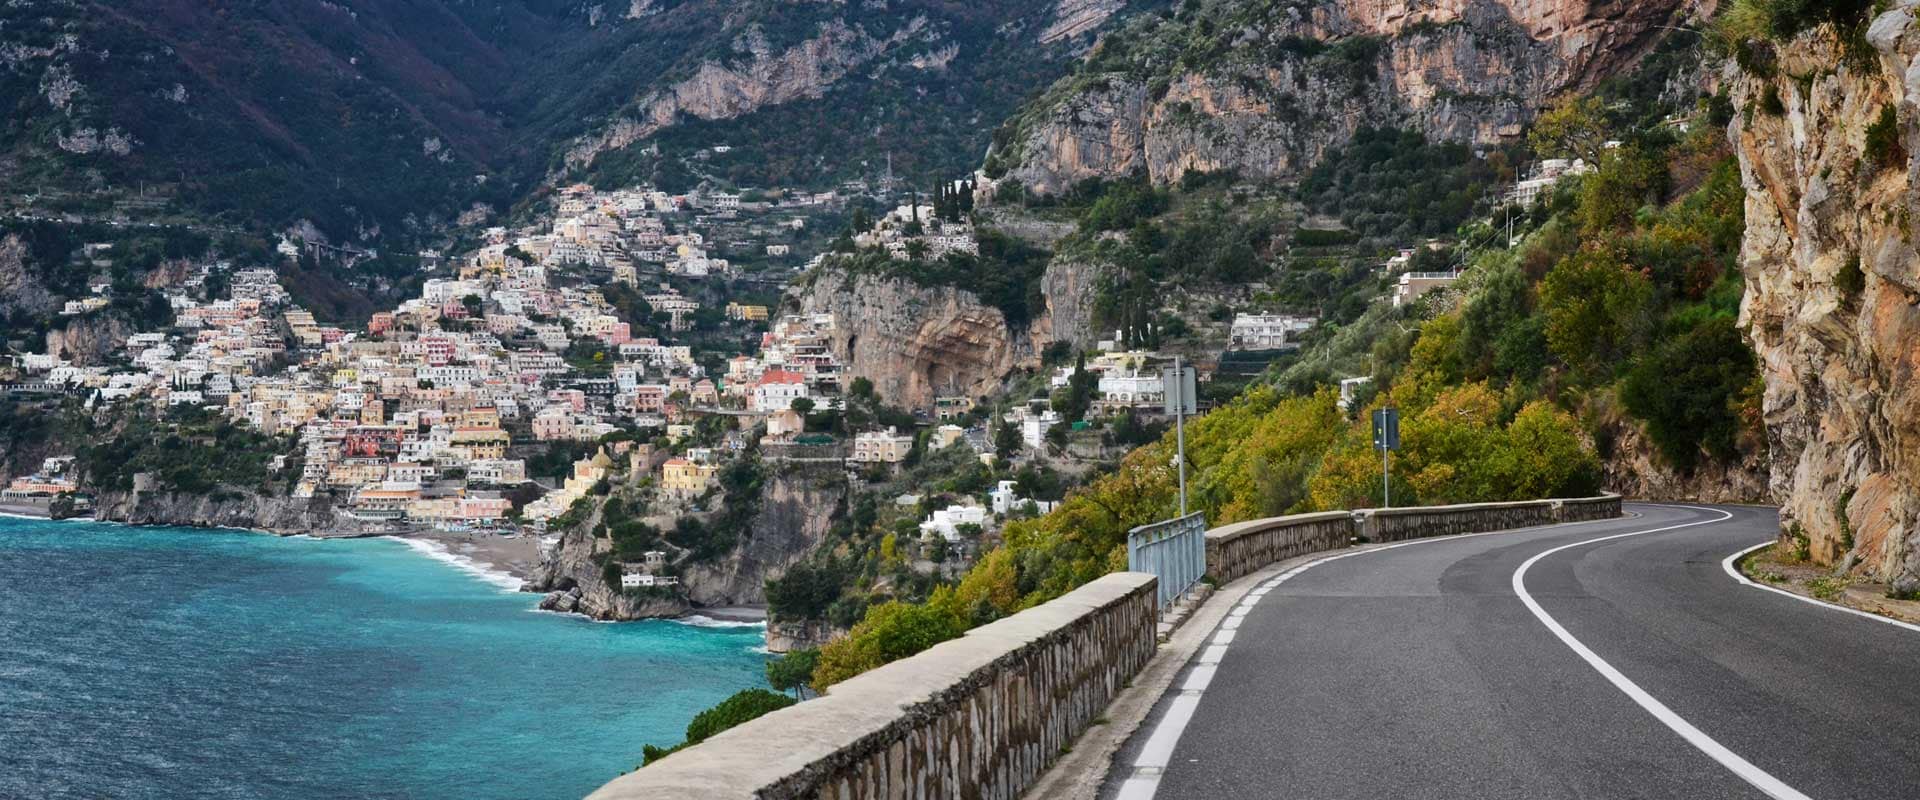 Amalfi, Italy coastal road